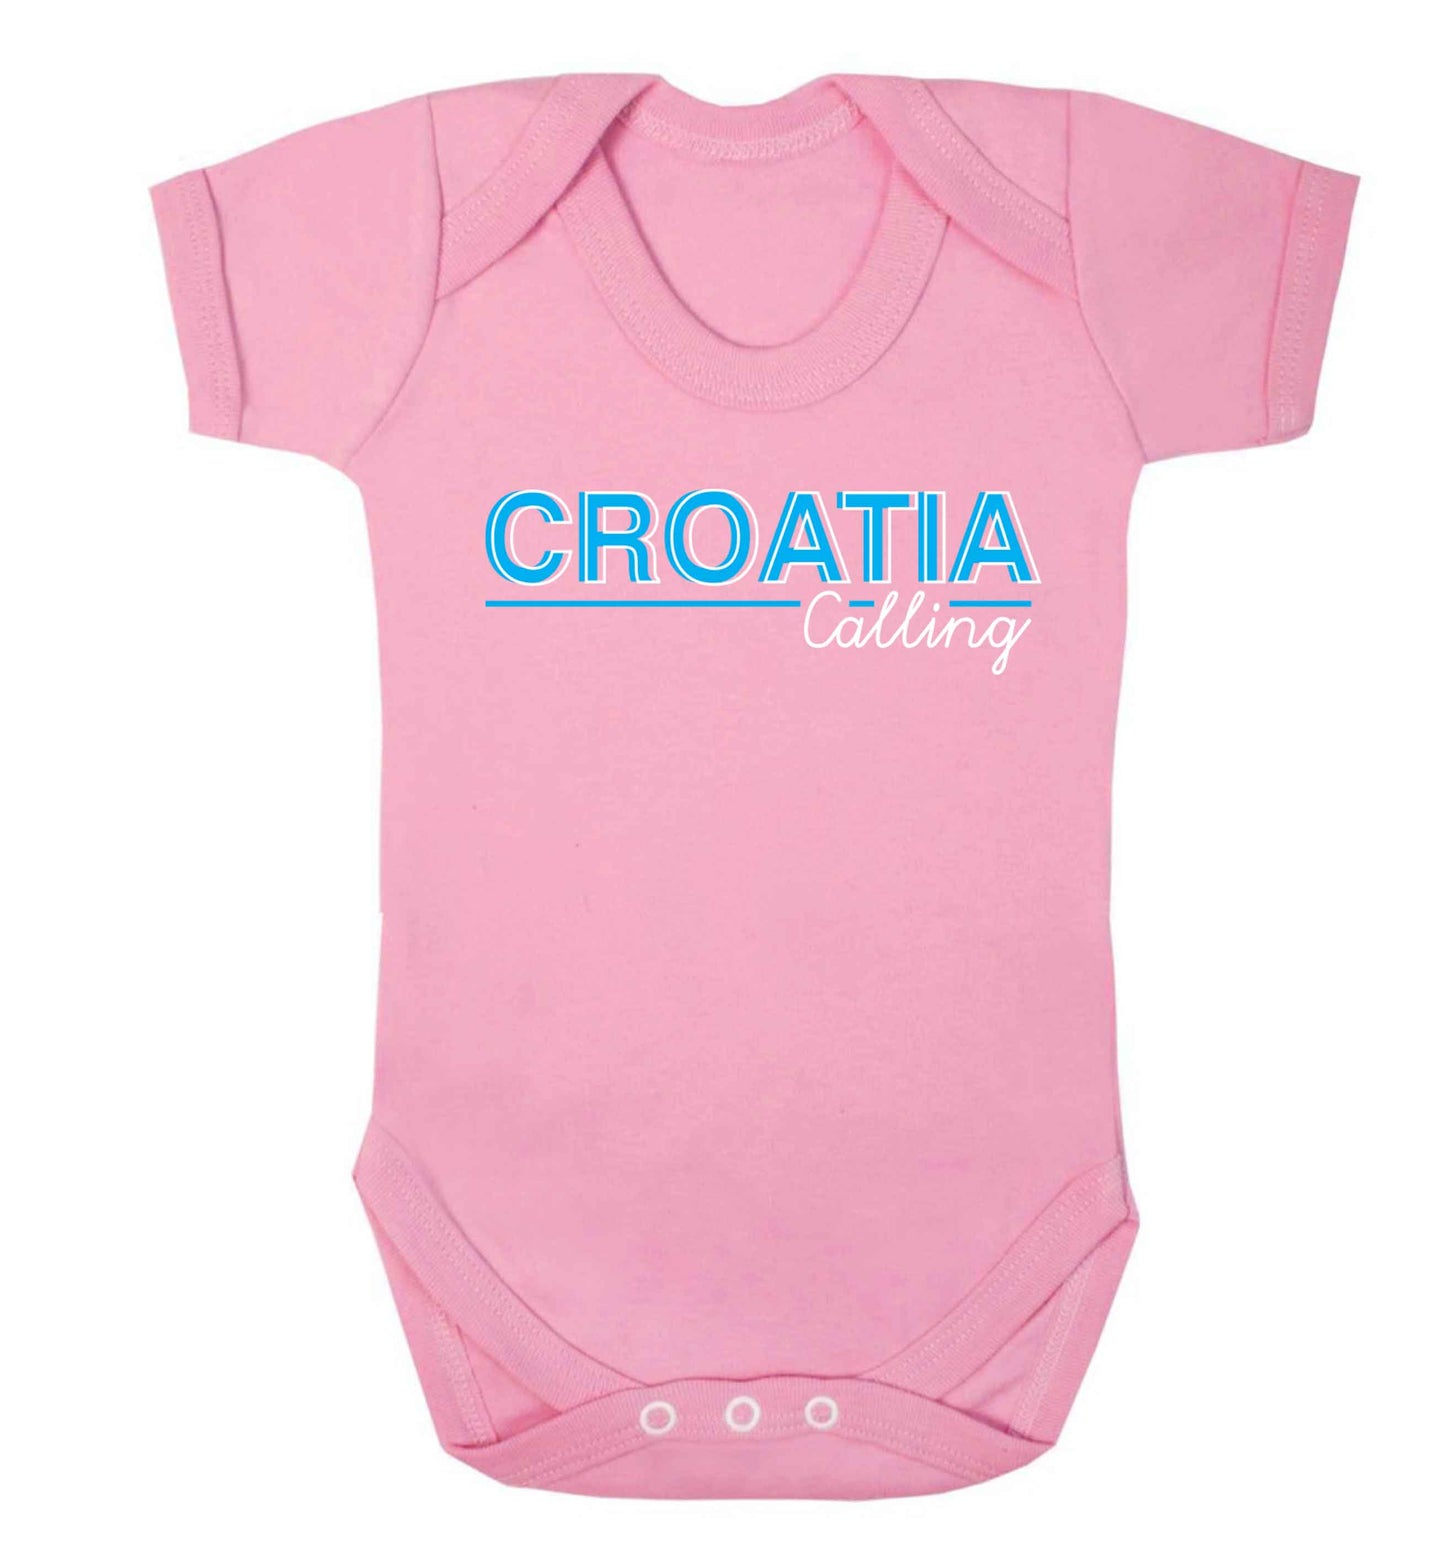 Croatia calling Baby Vest pale pink 18-24 months